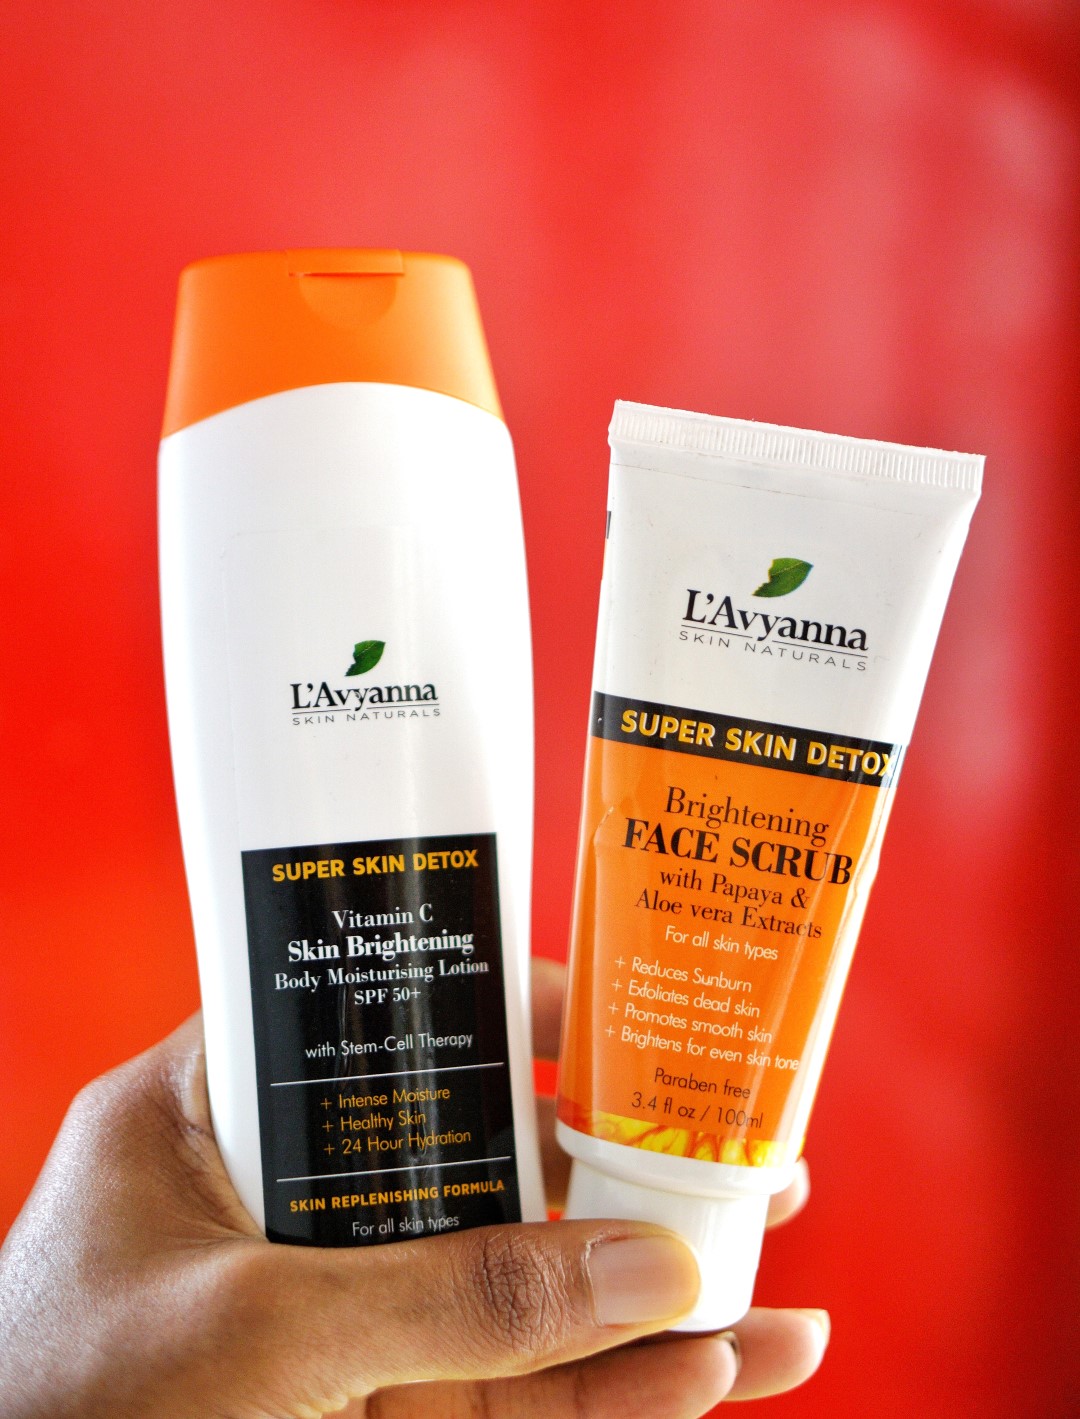 L'avyanna naturals products - super skin detox vitamin C lotion and face scrub